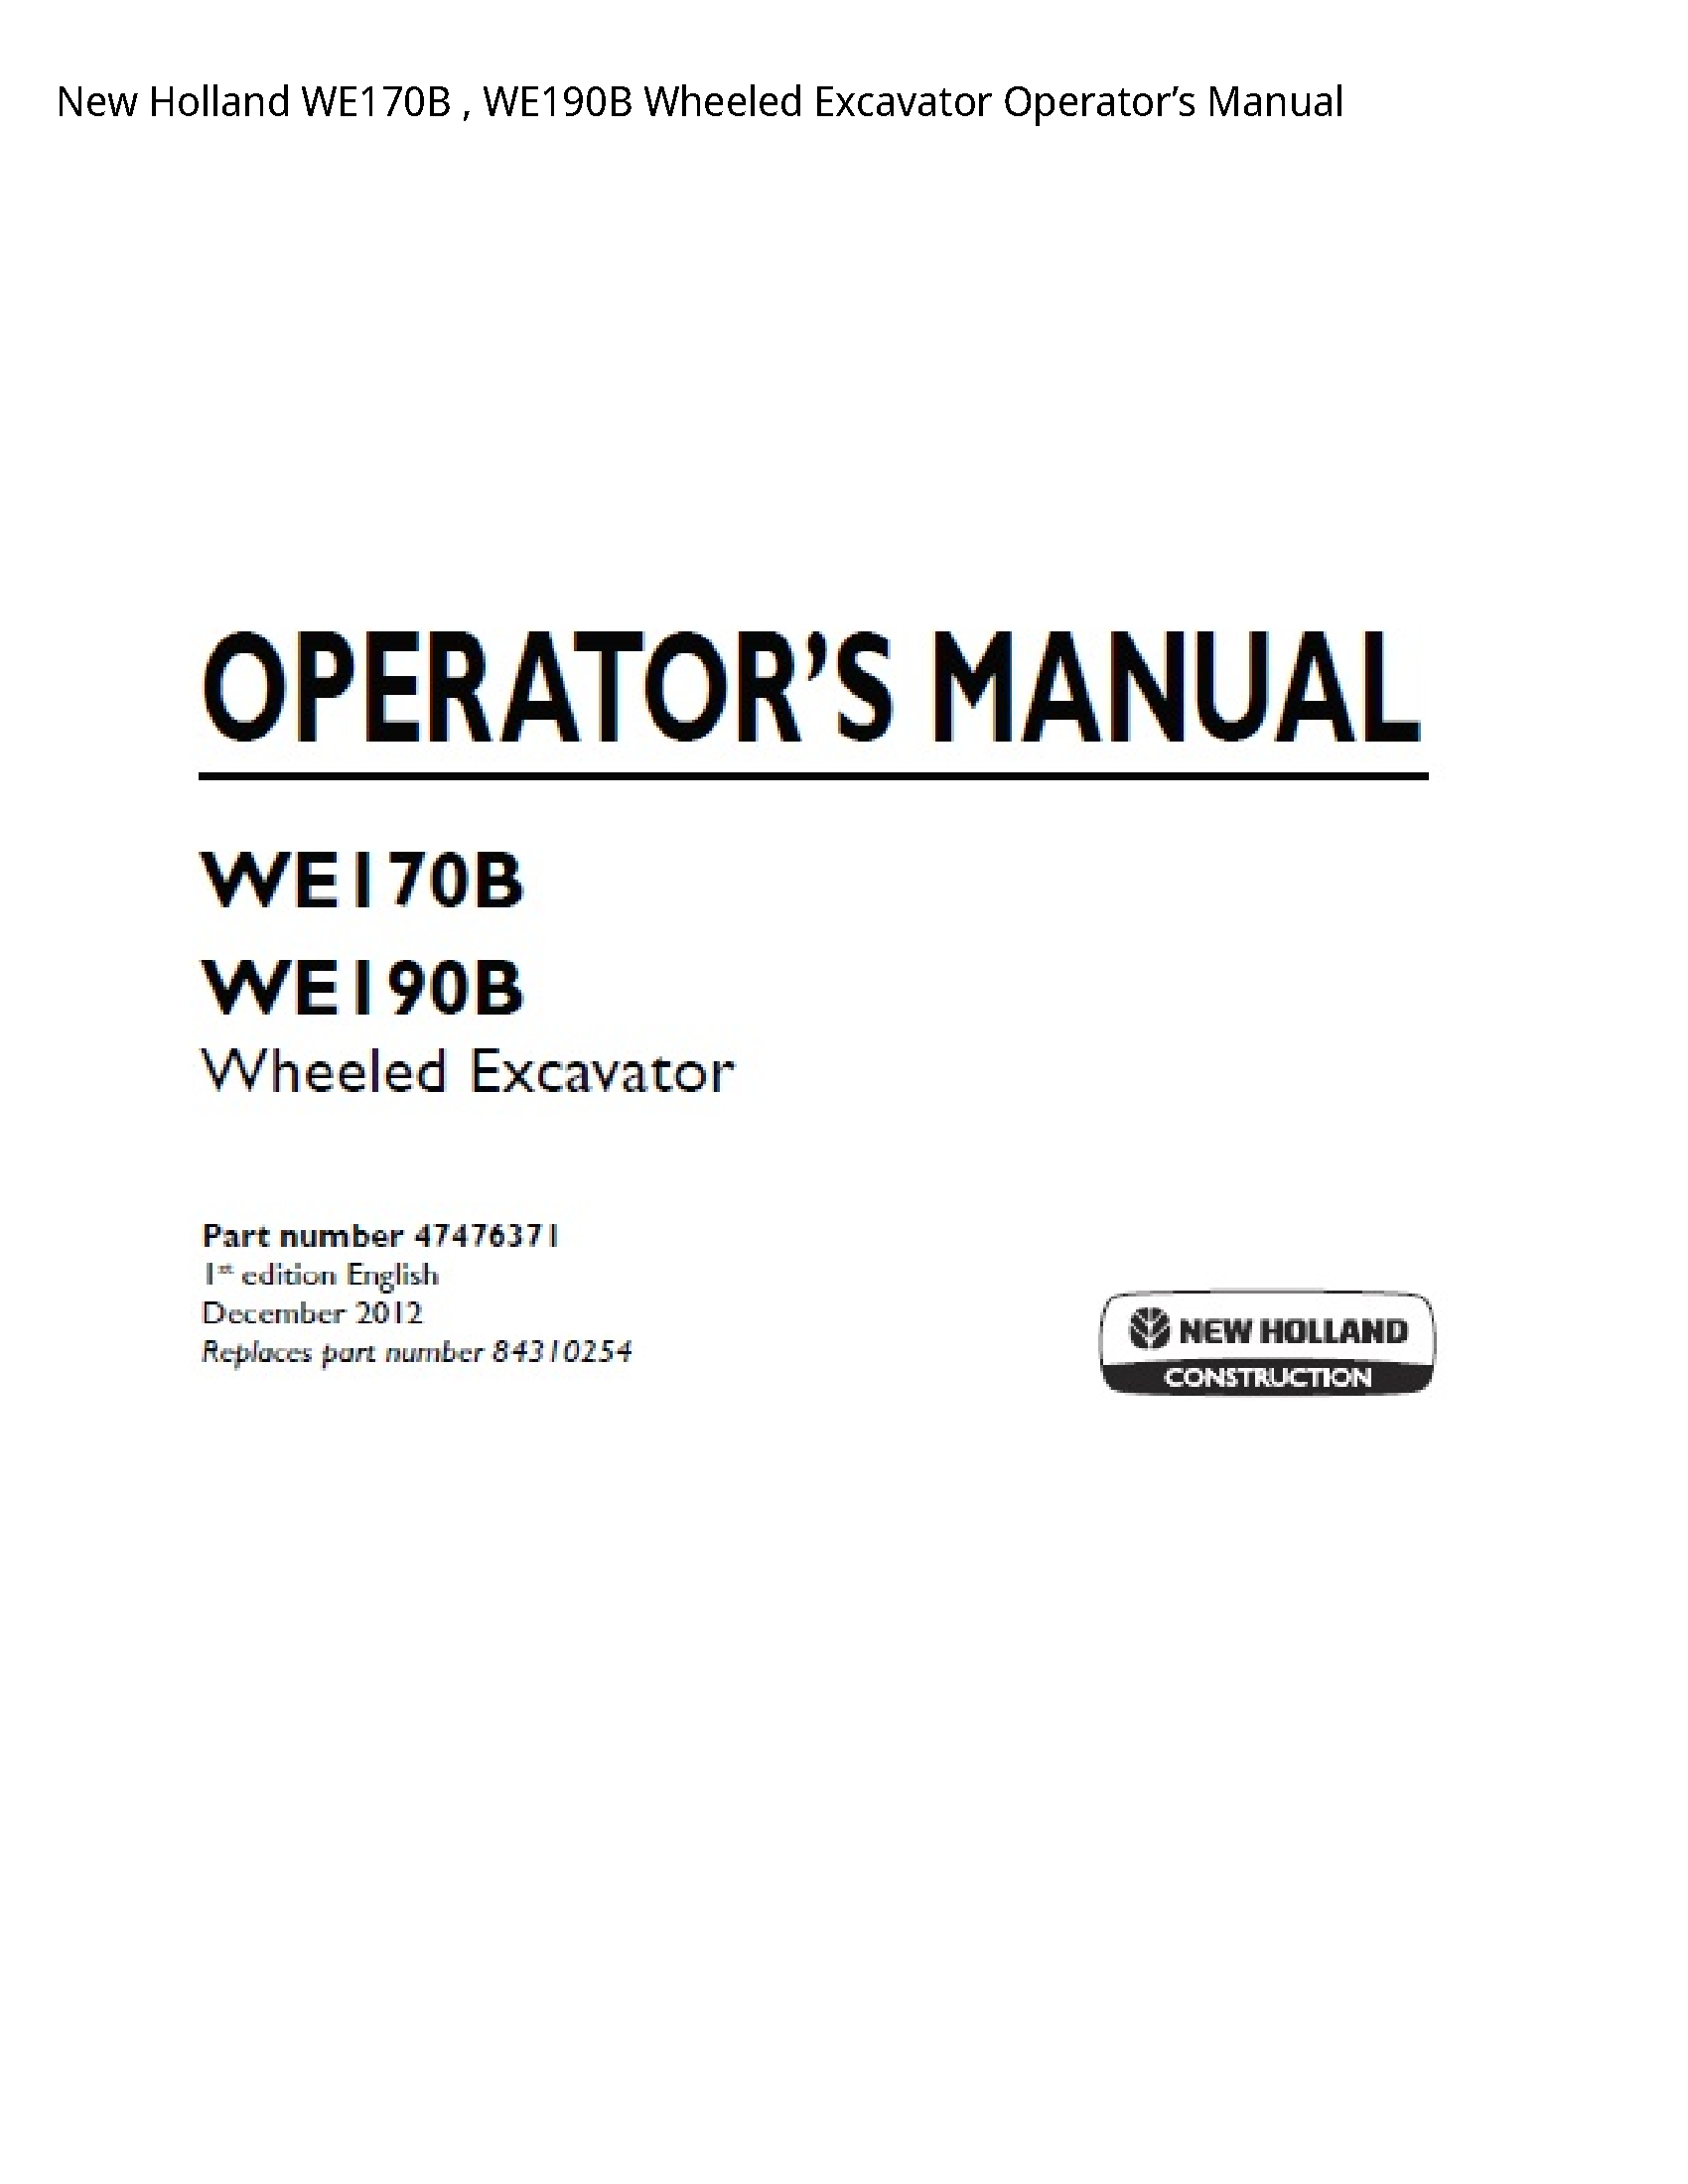 New Holland WE170B Wheeled Excavator Operator’s manual